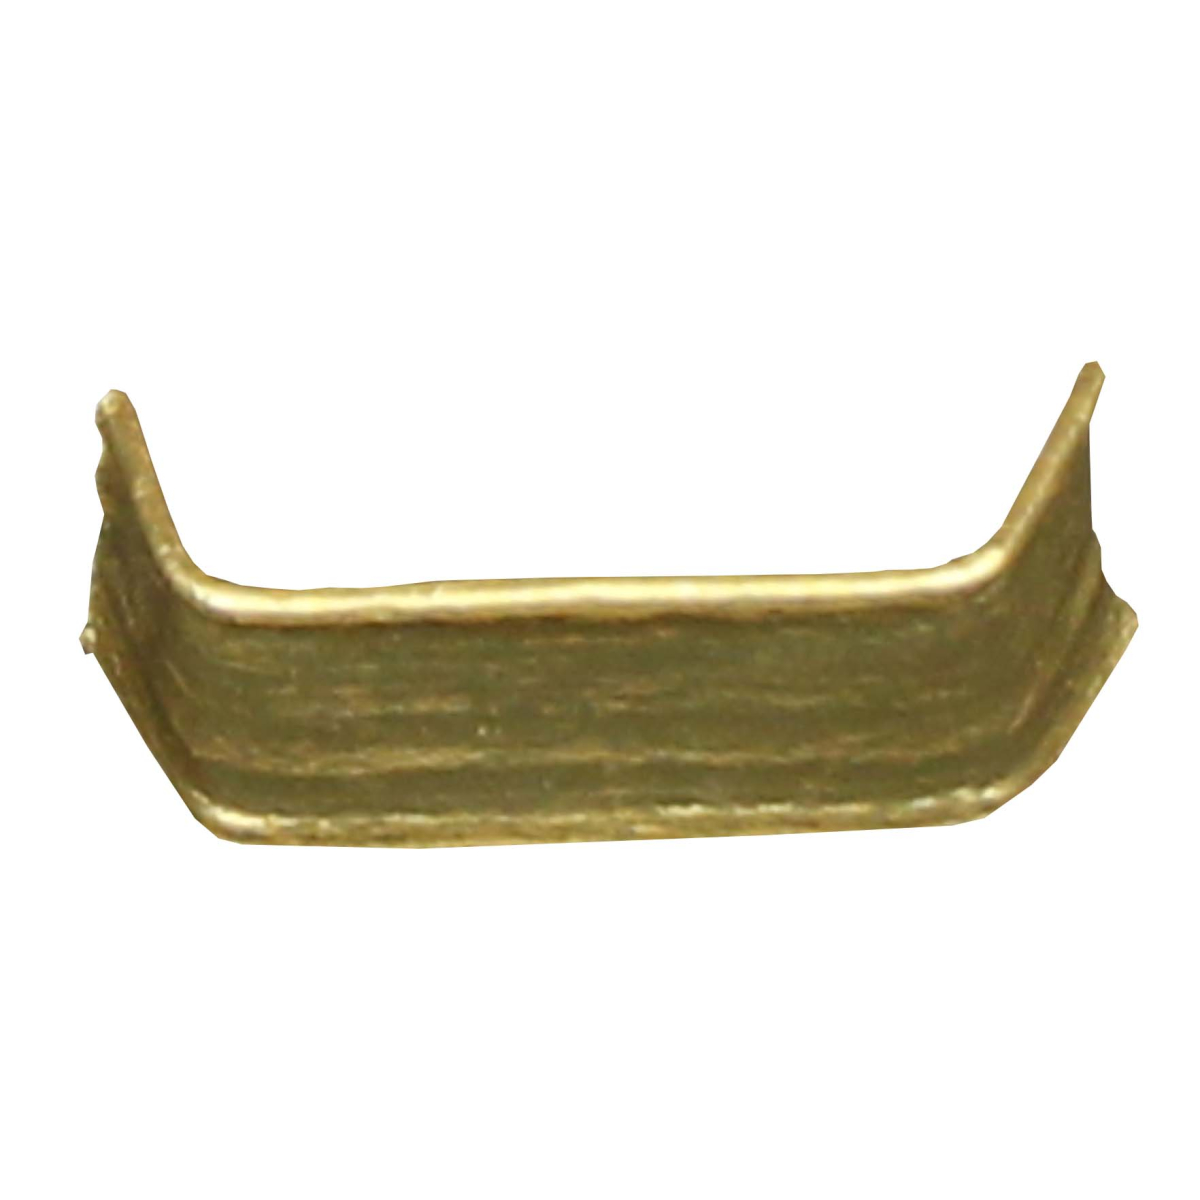 CLIPSE vorgebogen in  u-Form | gold
44/45 mm x 8 mm / 2-Draht 0,50 mm